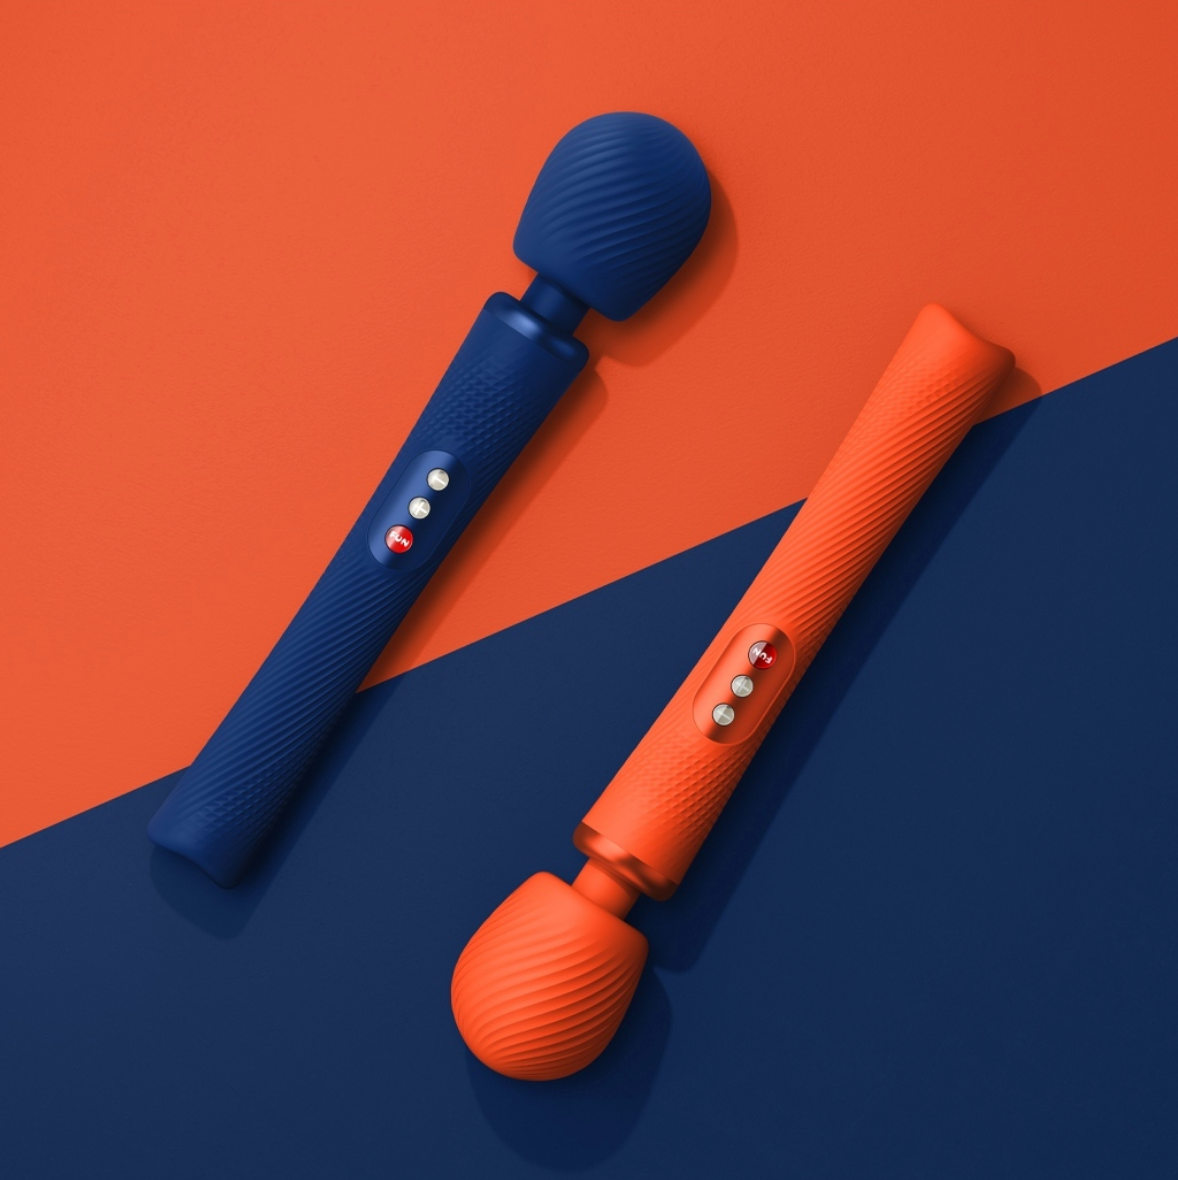 Orange and blue wand vibrators